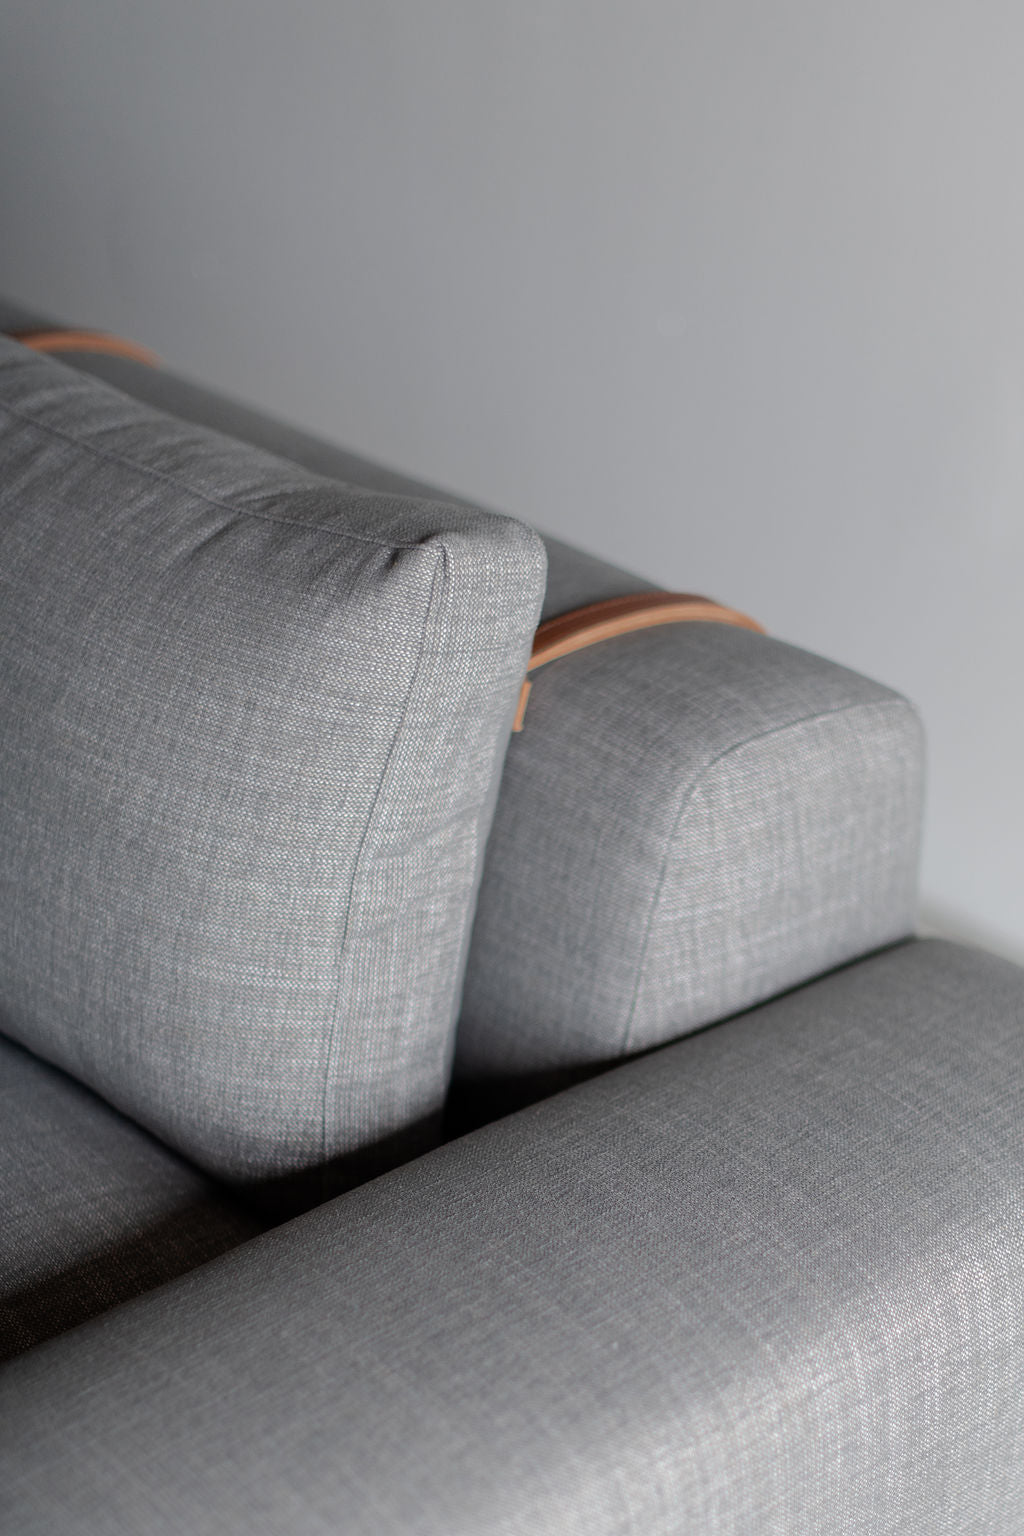 Rivera sofa- wood frame, steel legs and upholstered cushions 